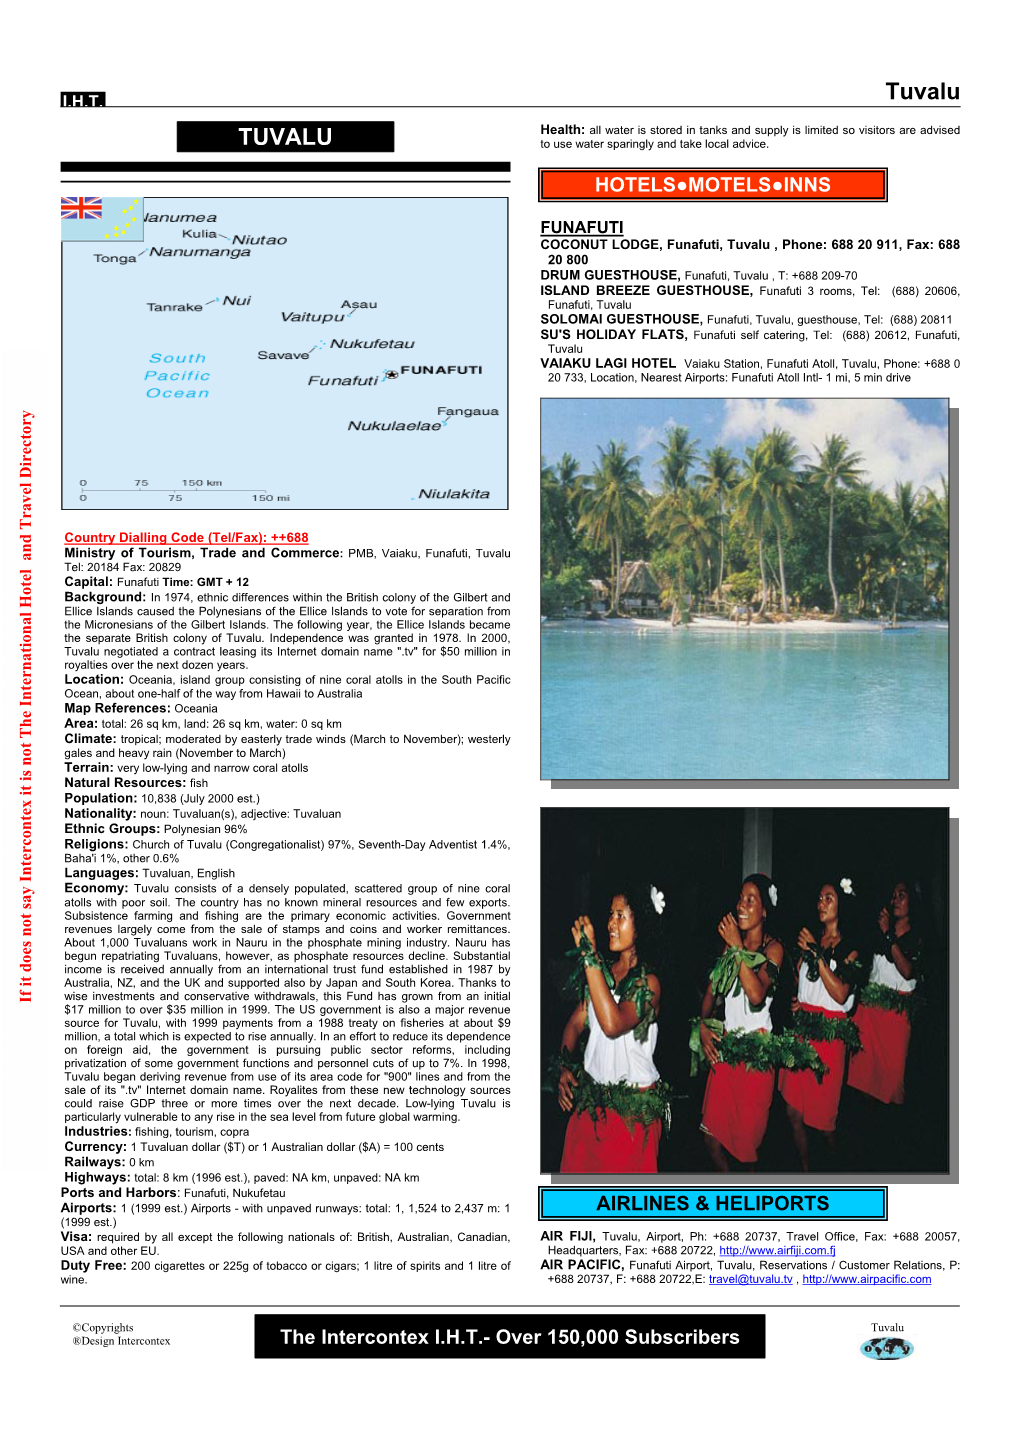 Tuvalu I.H.T